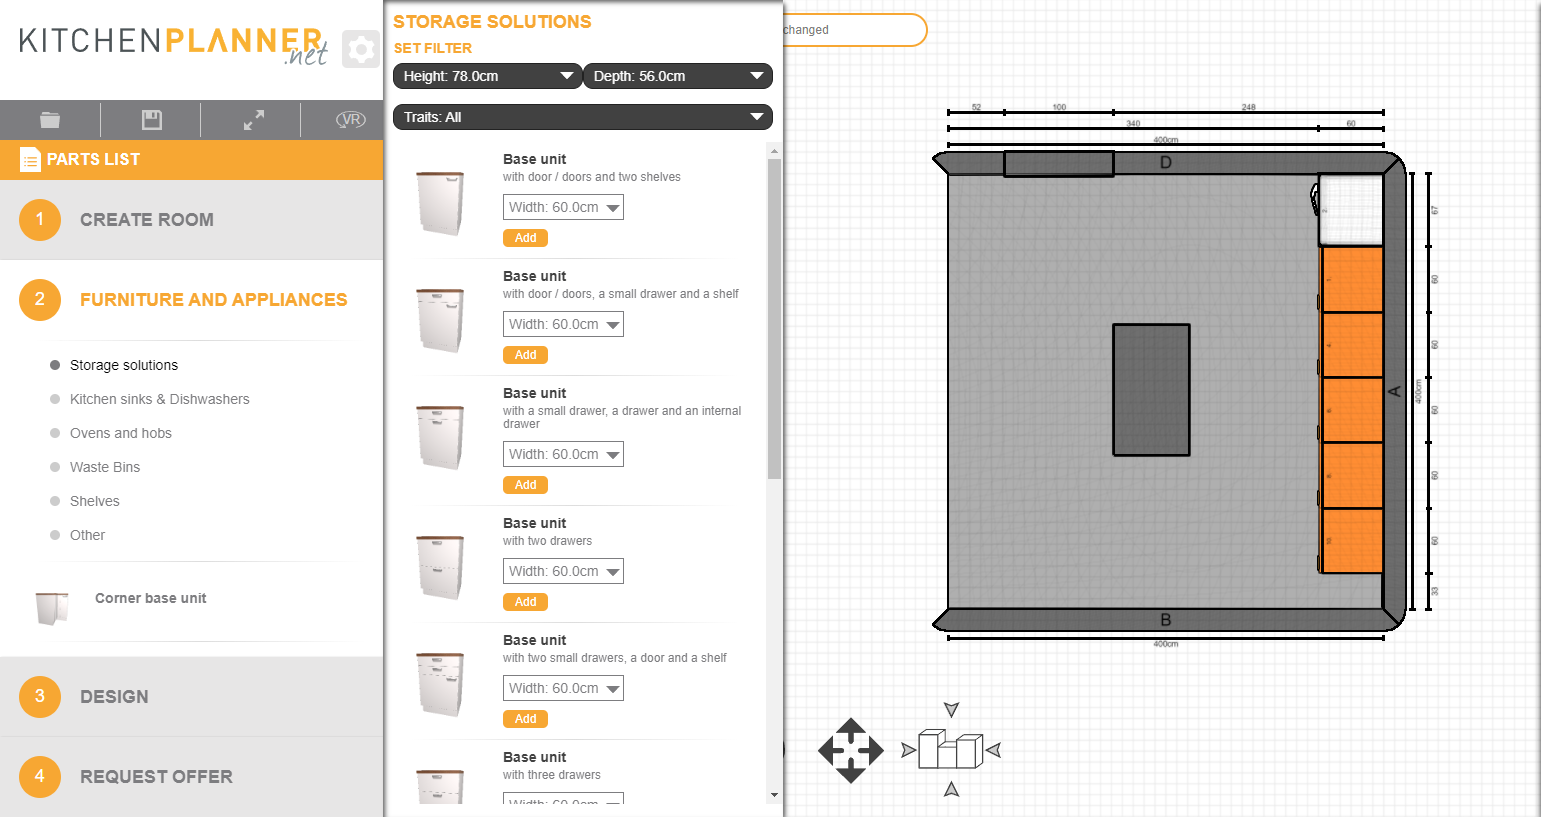 A Screenshot of Kitchenplanner.net's Furniture Options